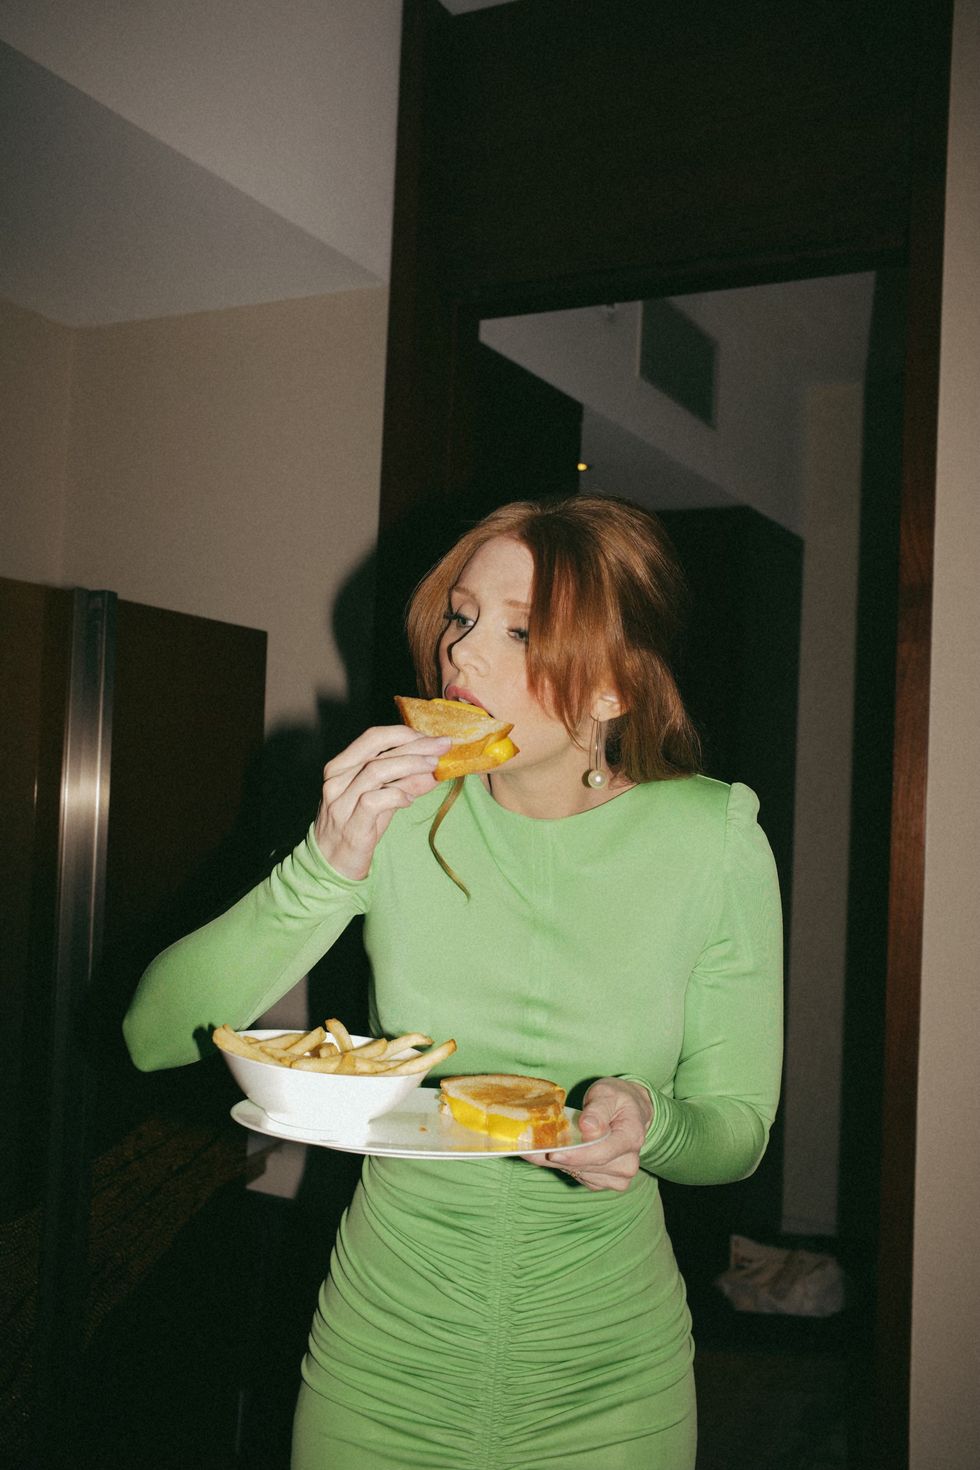 a woman eating a sandwich